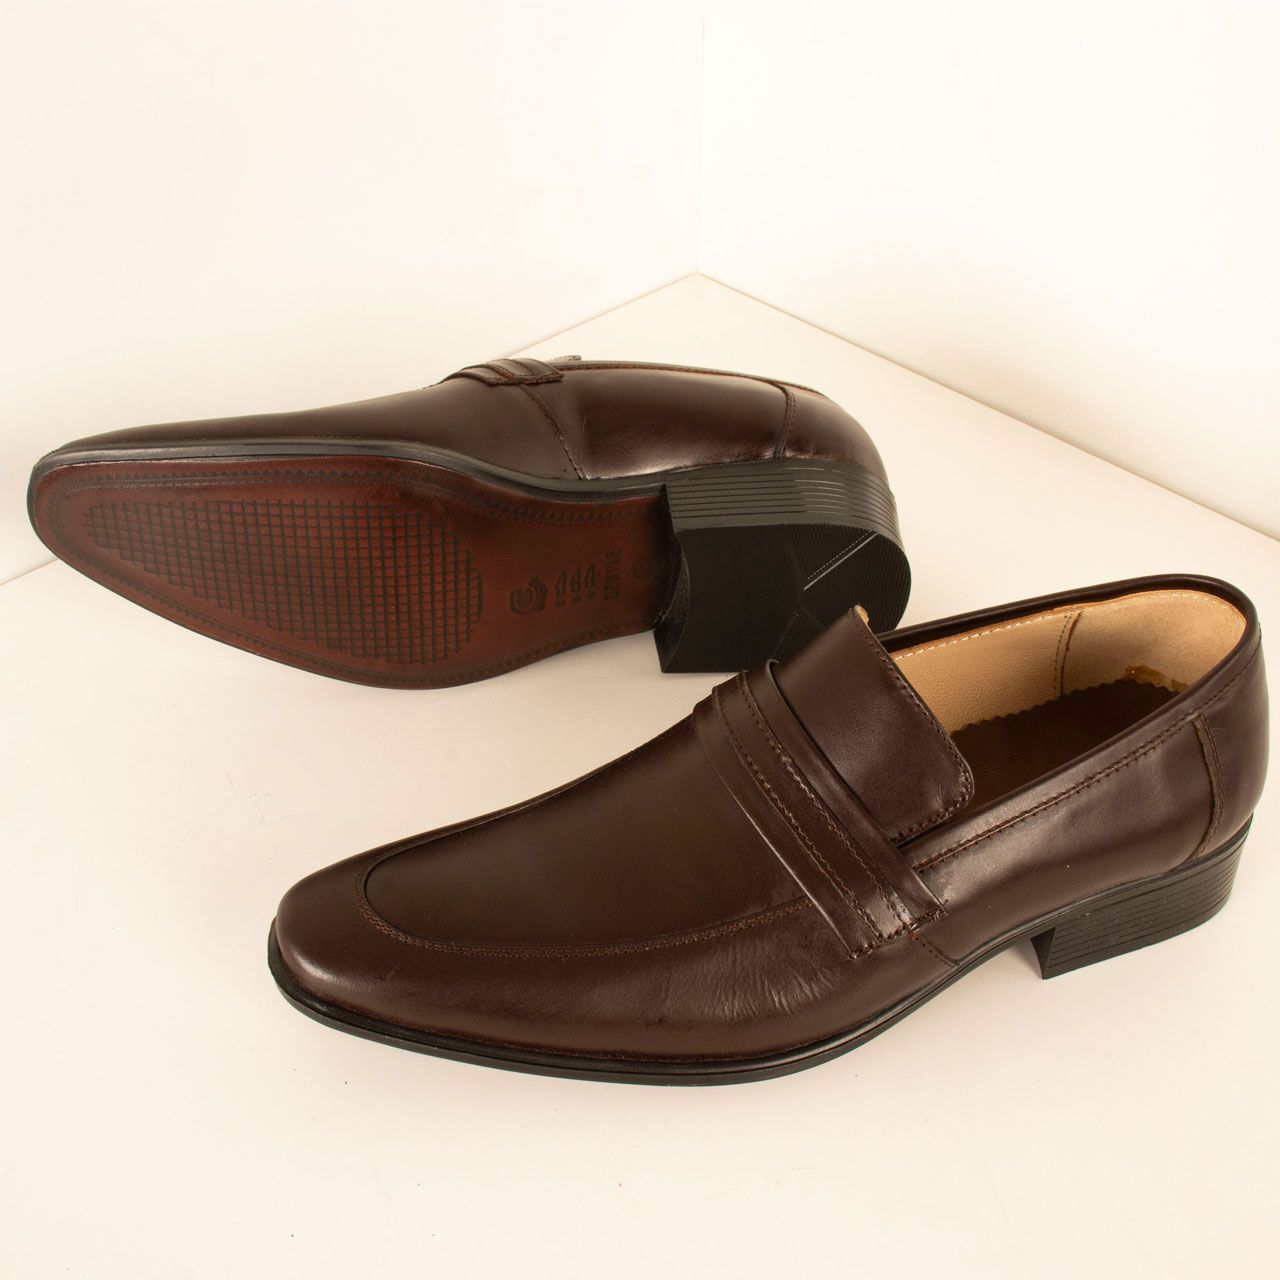  کفش مردانه پارینه چرم مدل SHO193-7 -  - 3